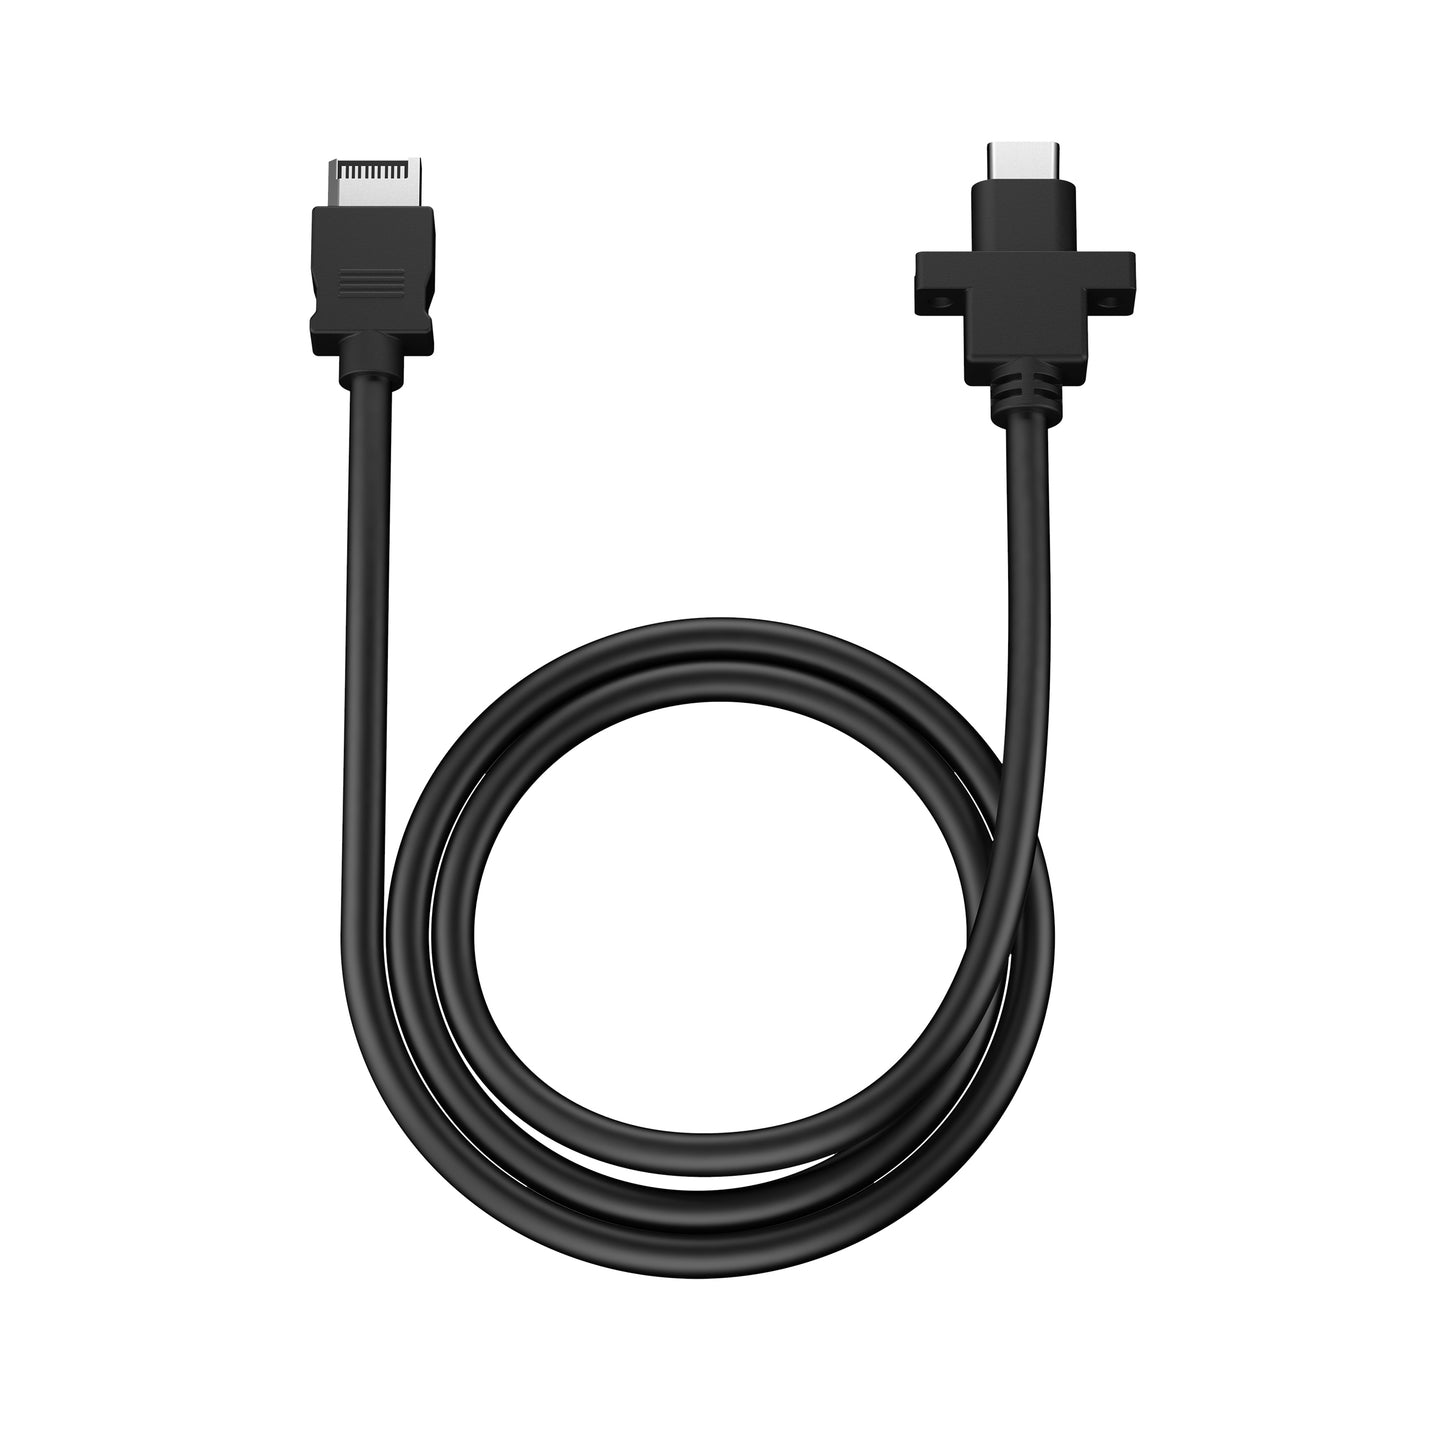 Fractal USB-C 10Gbps Cable – Model D